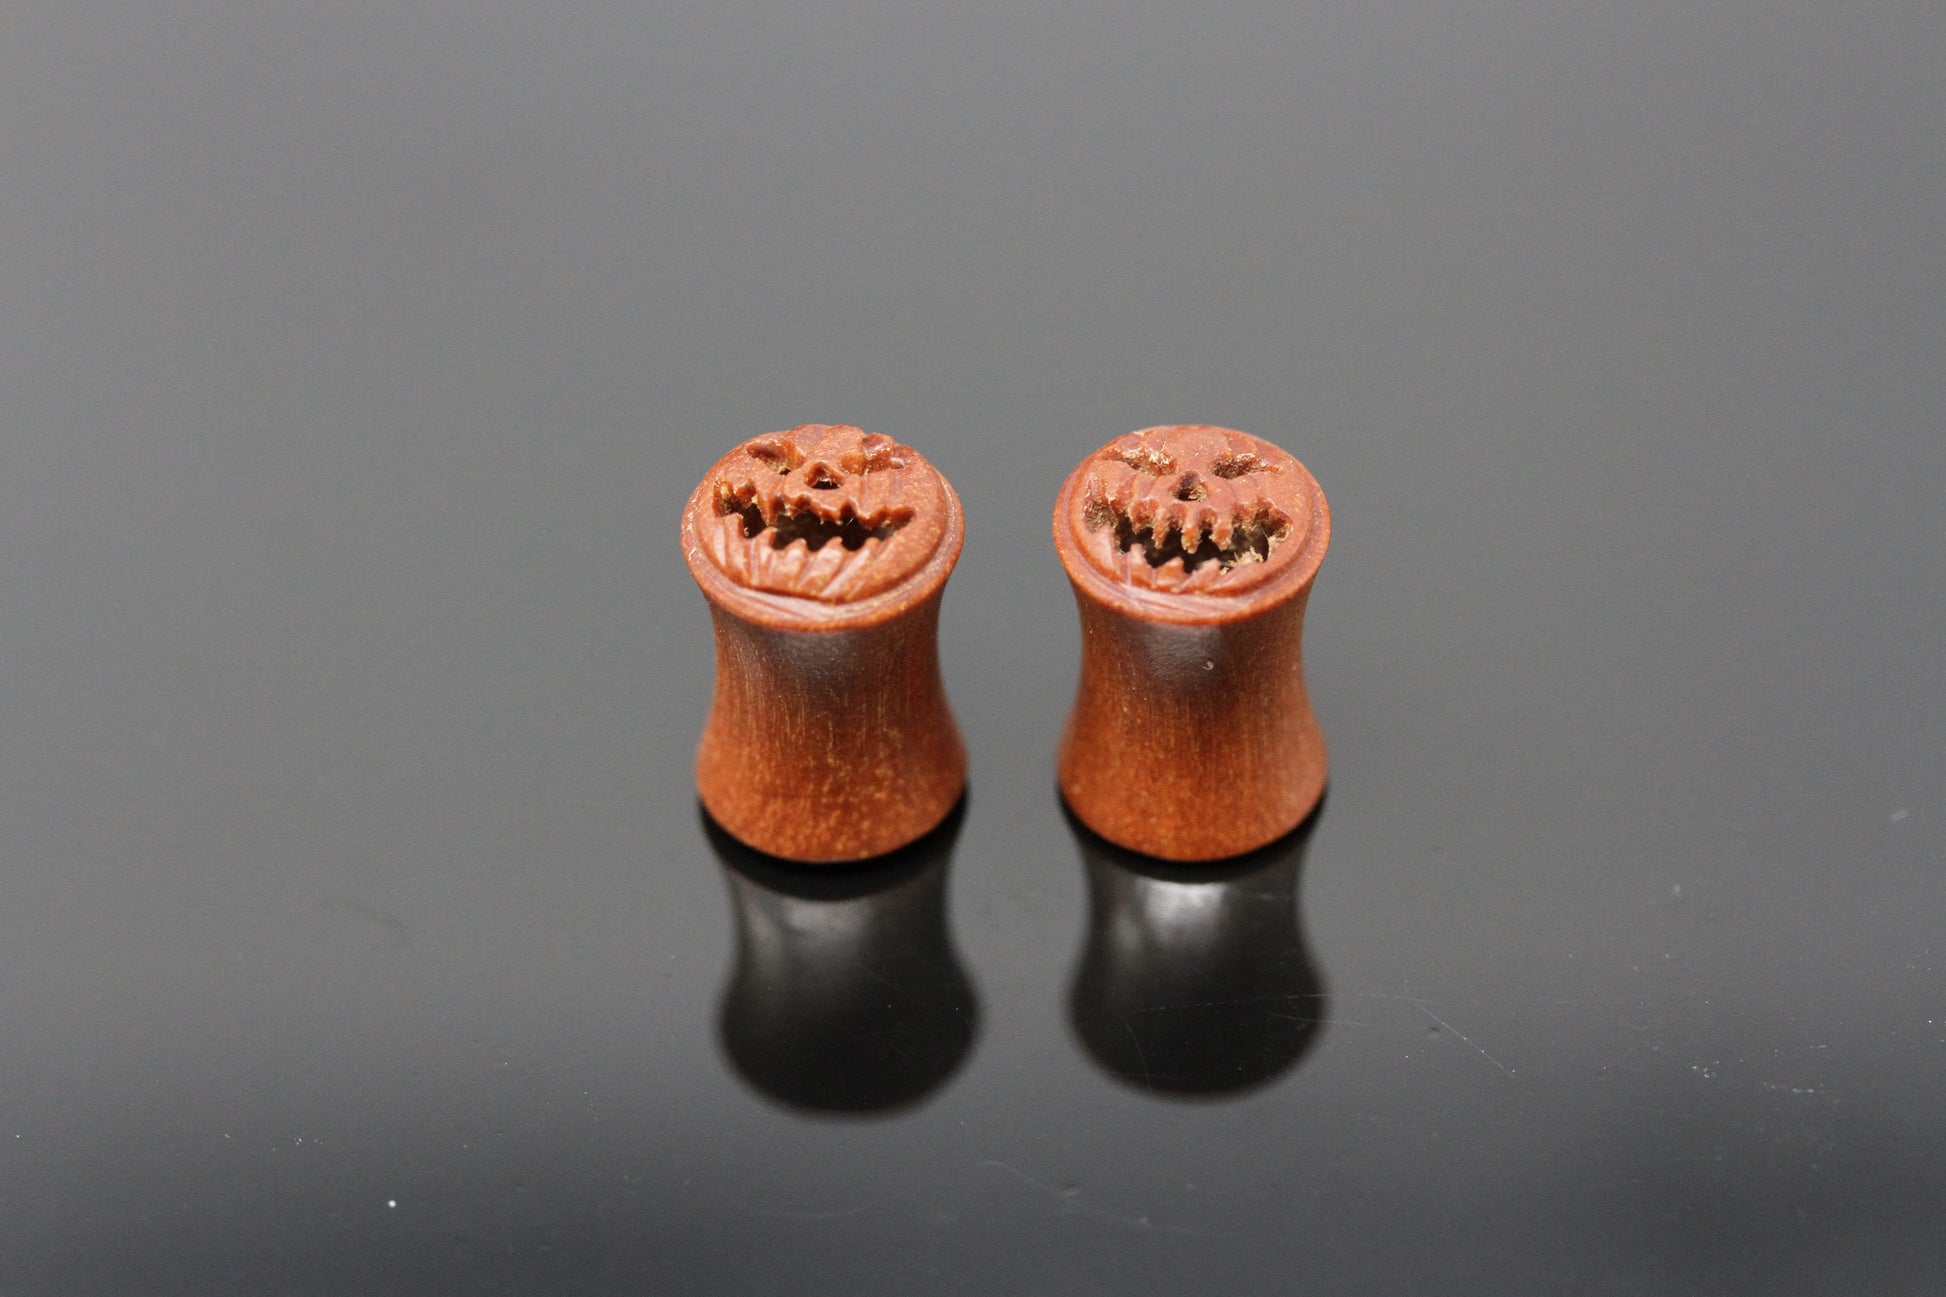 Carved pumpkin plugs